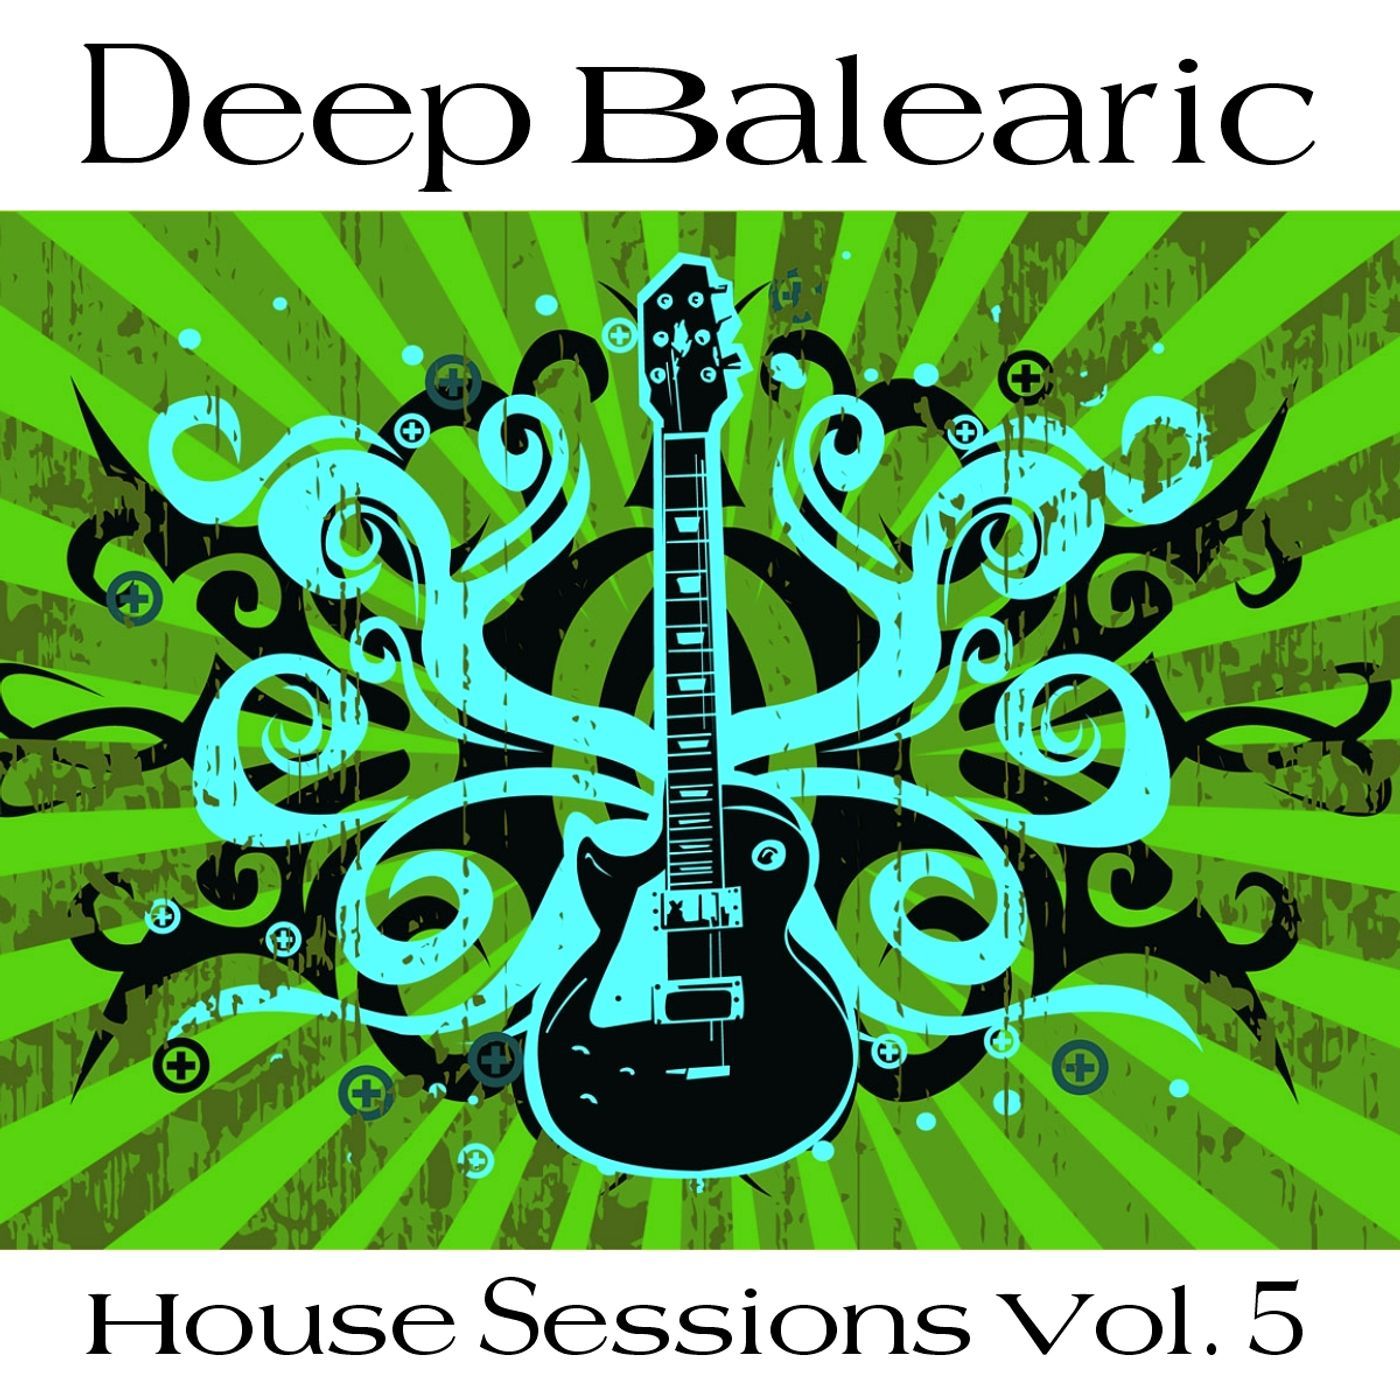 Deep Balearic House Sessions Vol. 5